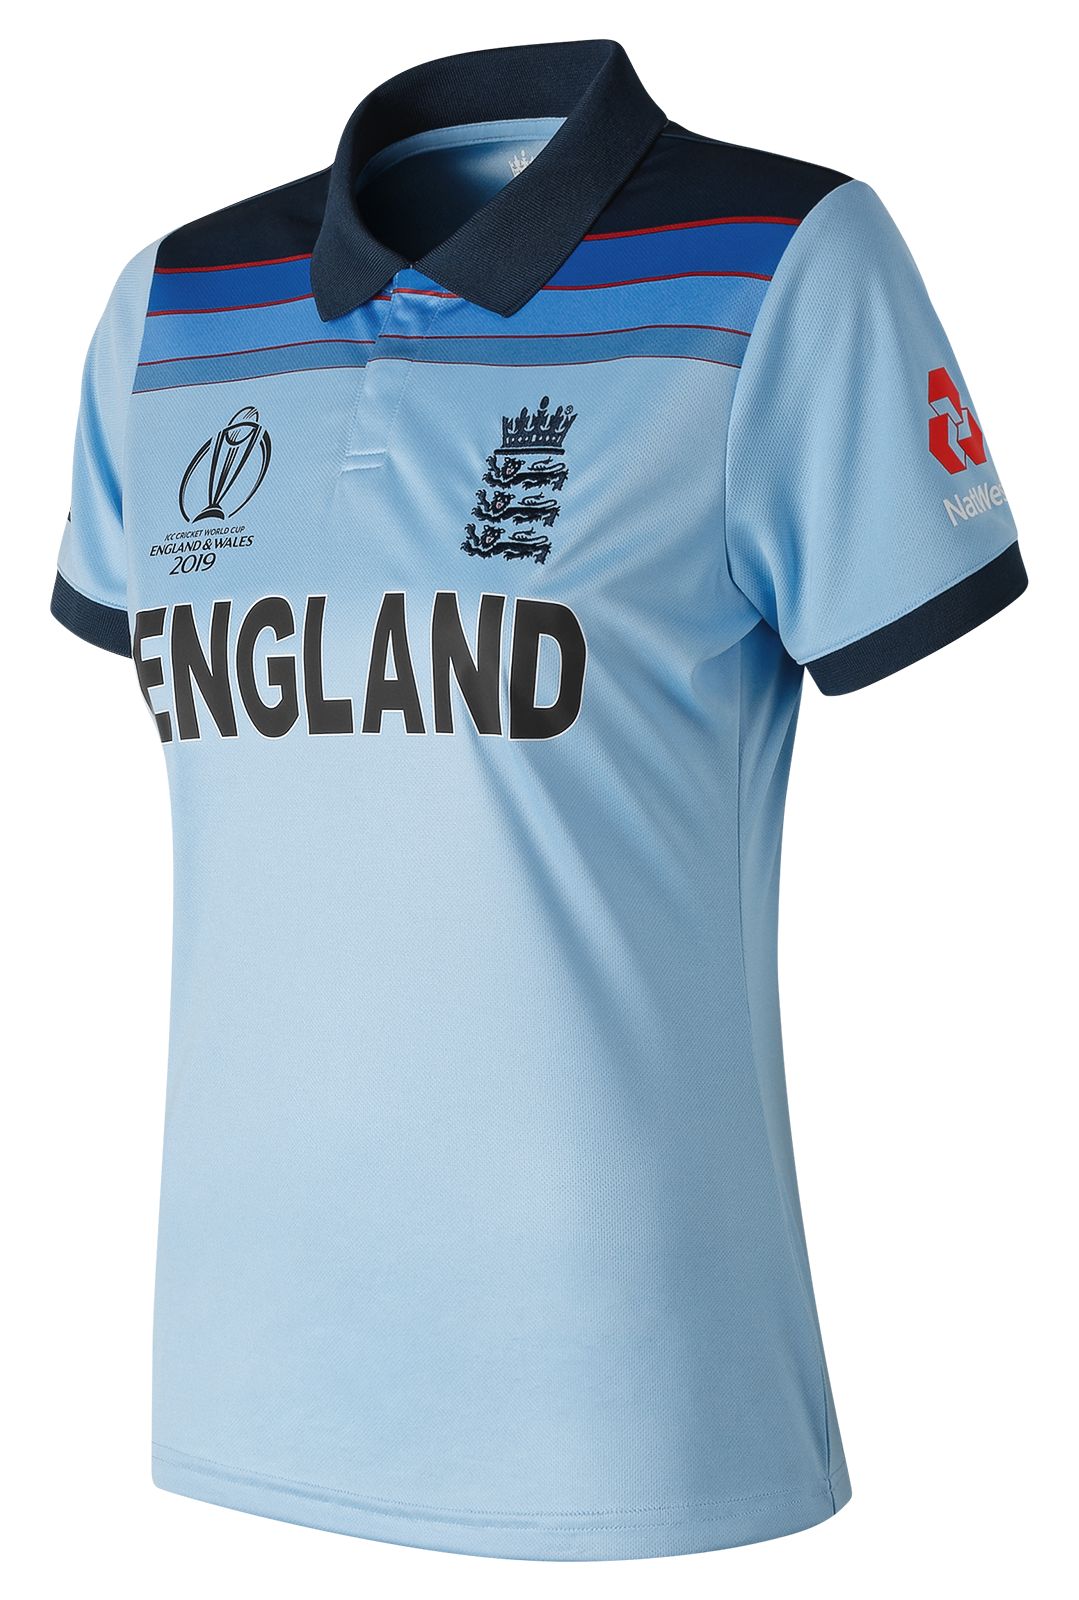 england cricket jersey india